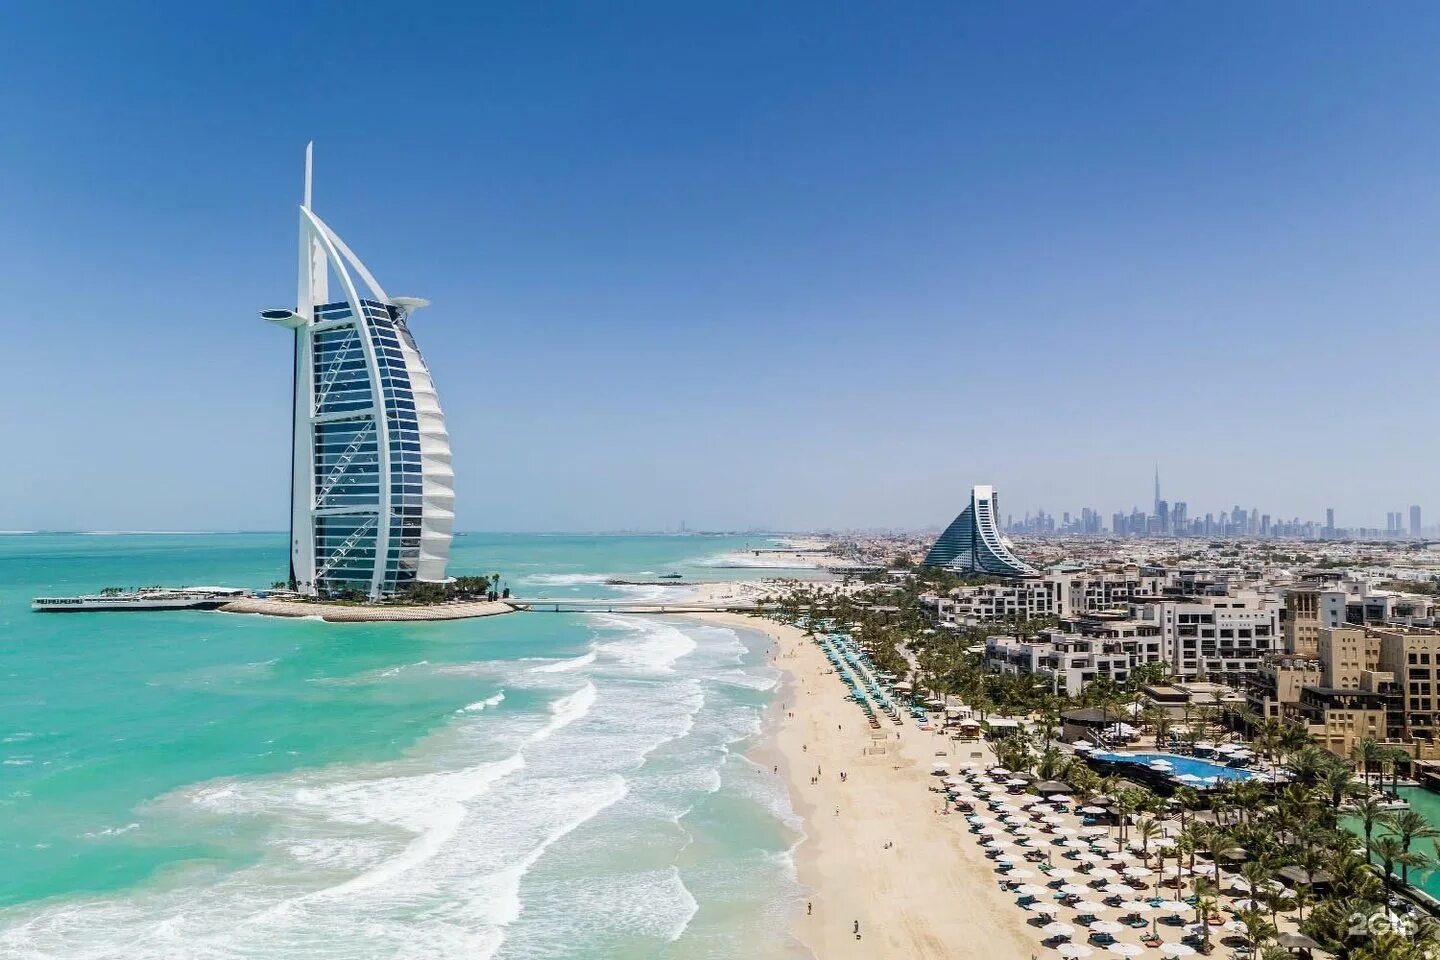 Дубай Джумейра Бич. Отель в Дубае Jumeirah Beach Hotel. Пляж Джумейра Бич в Дубае. Пляж Бурдж Аль араб Дубай. Пляж араб